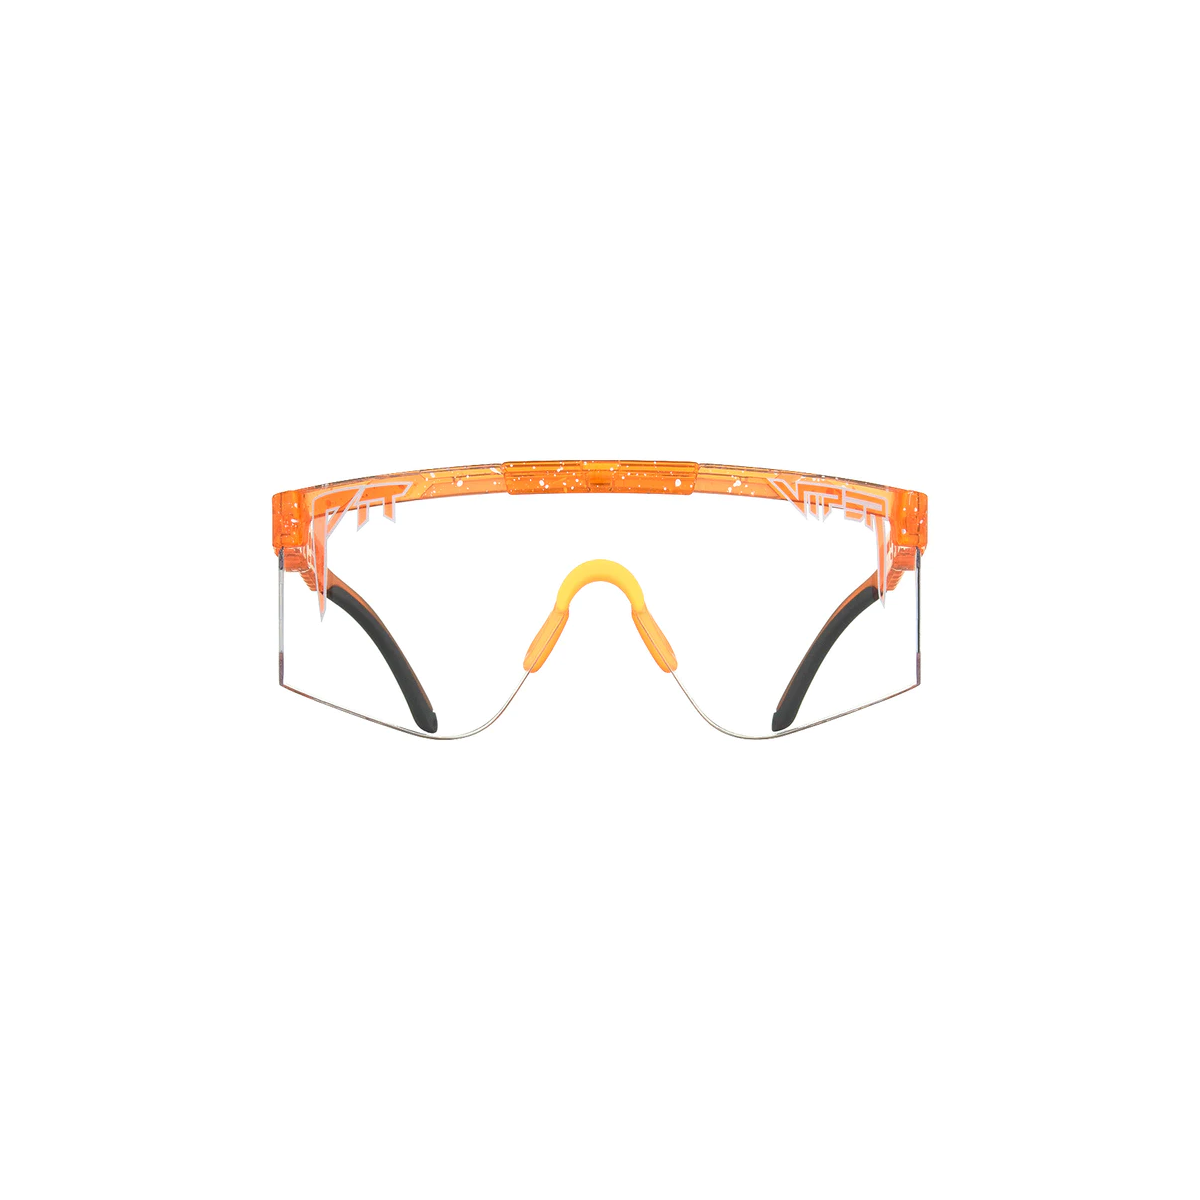 Gafas de bicicleta Pit Viper The 2000s - The All Night Caulker con lente transparente montura naranja